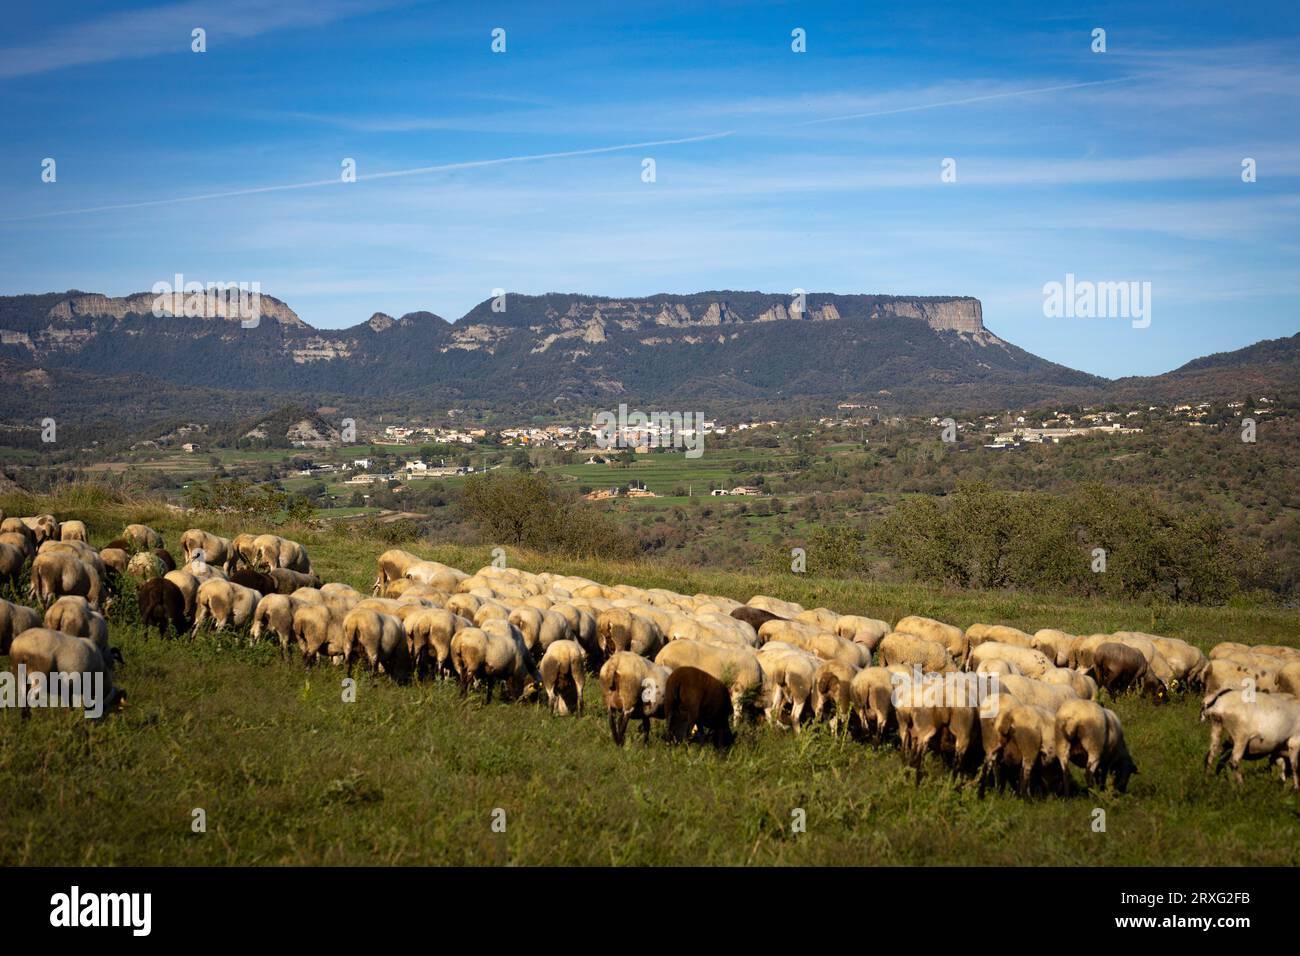 Ripollesa Sheep flock (ovella ripollesa). Ovis aries. With Cabrerès - Collsacabra mountain range on the background. L'Esquirol, Osona, Barcelona, Spai Stock Photo